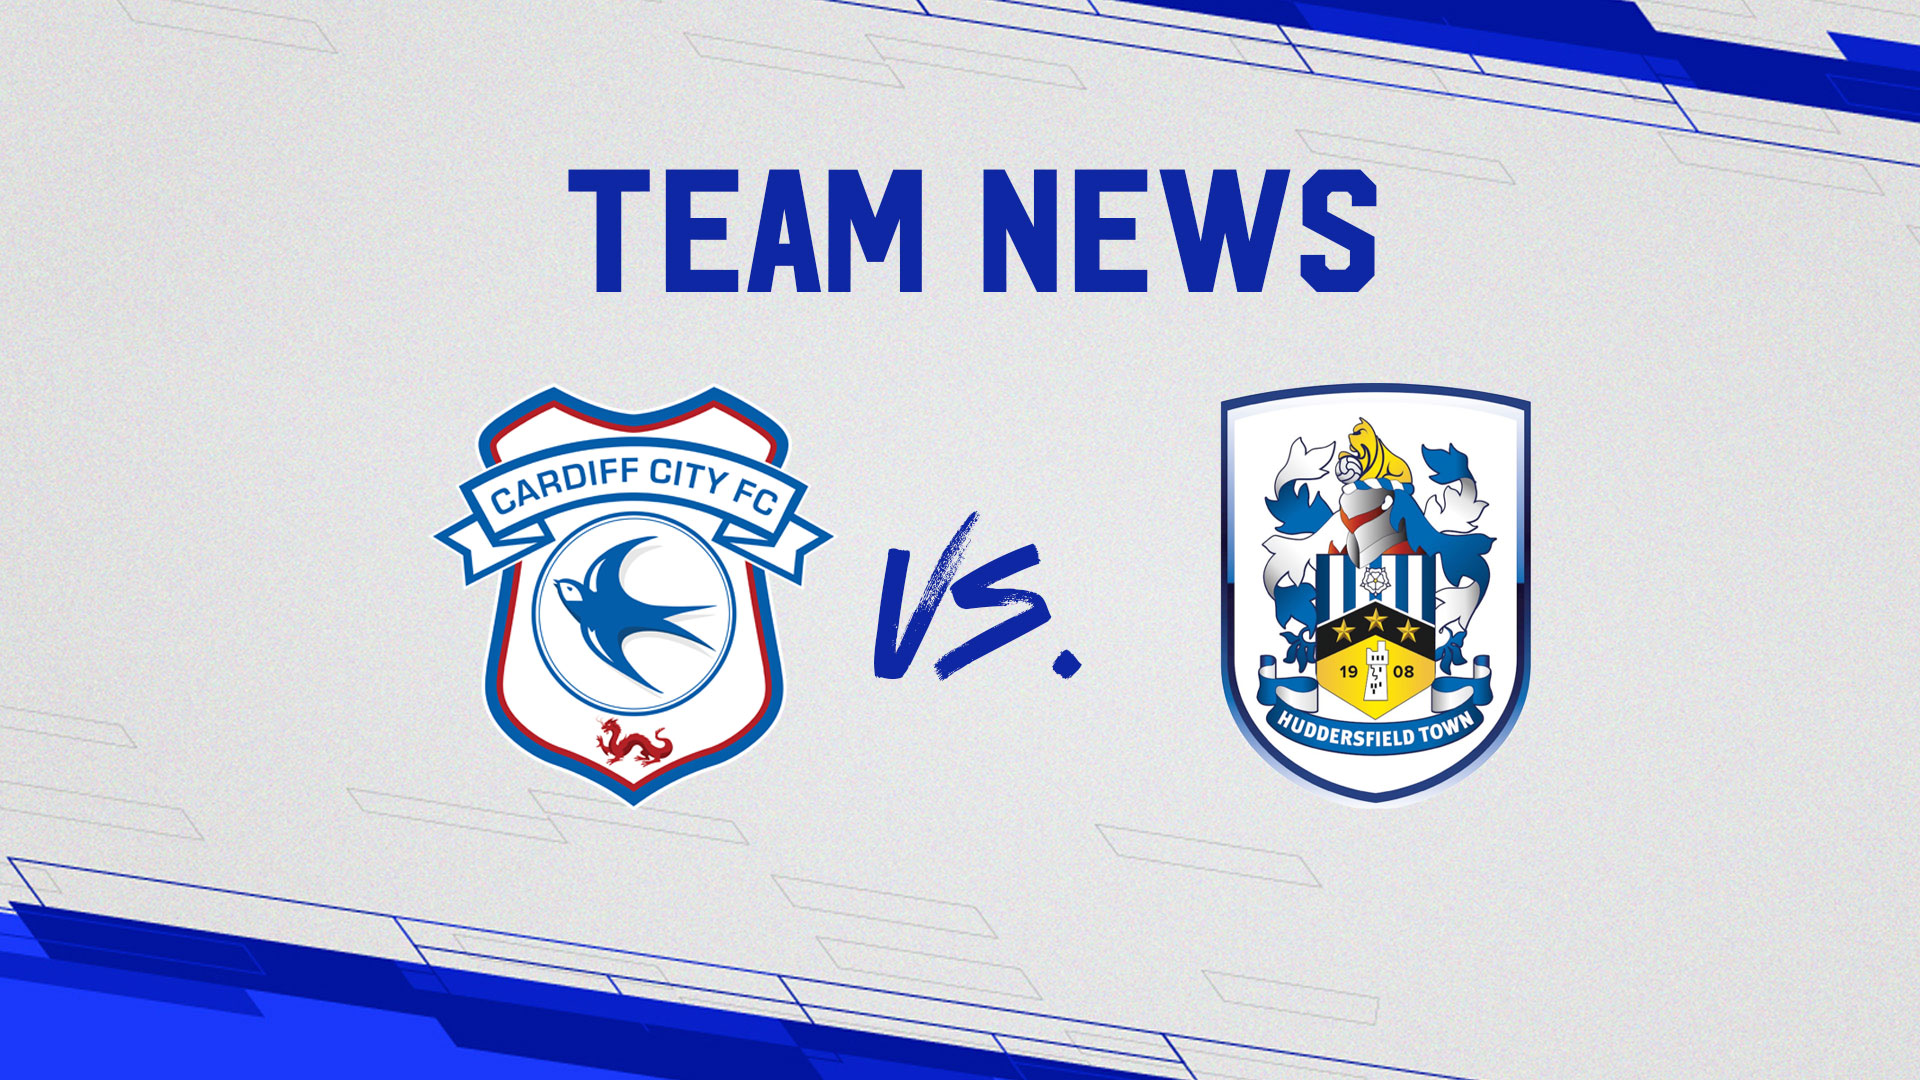 Team News: Cardiff City vs. Huddersfield Town